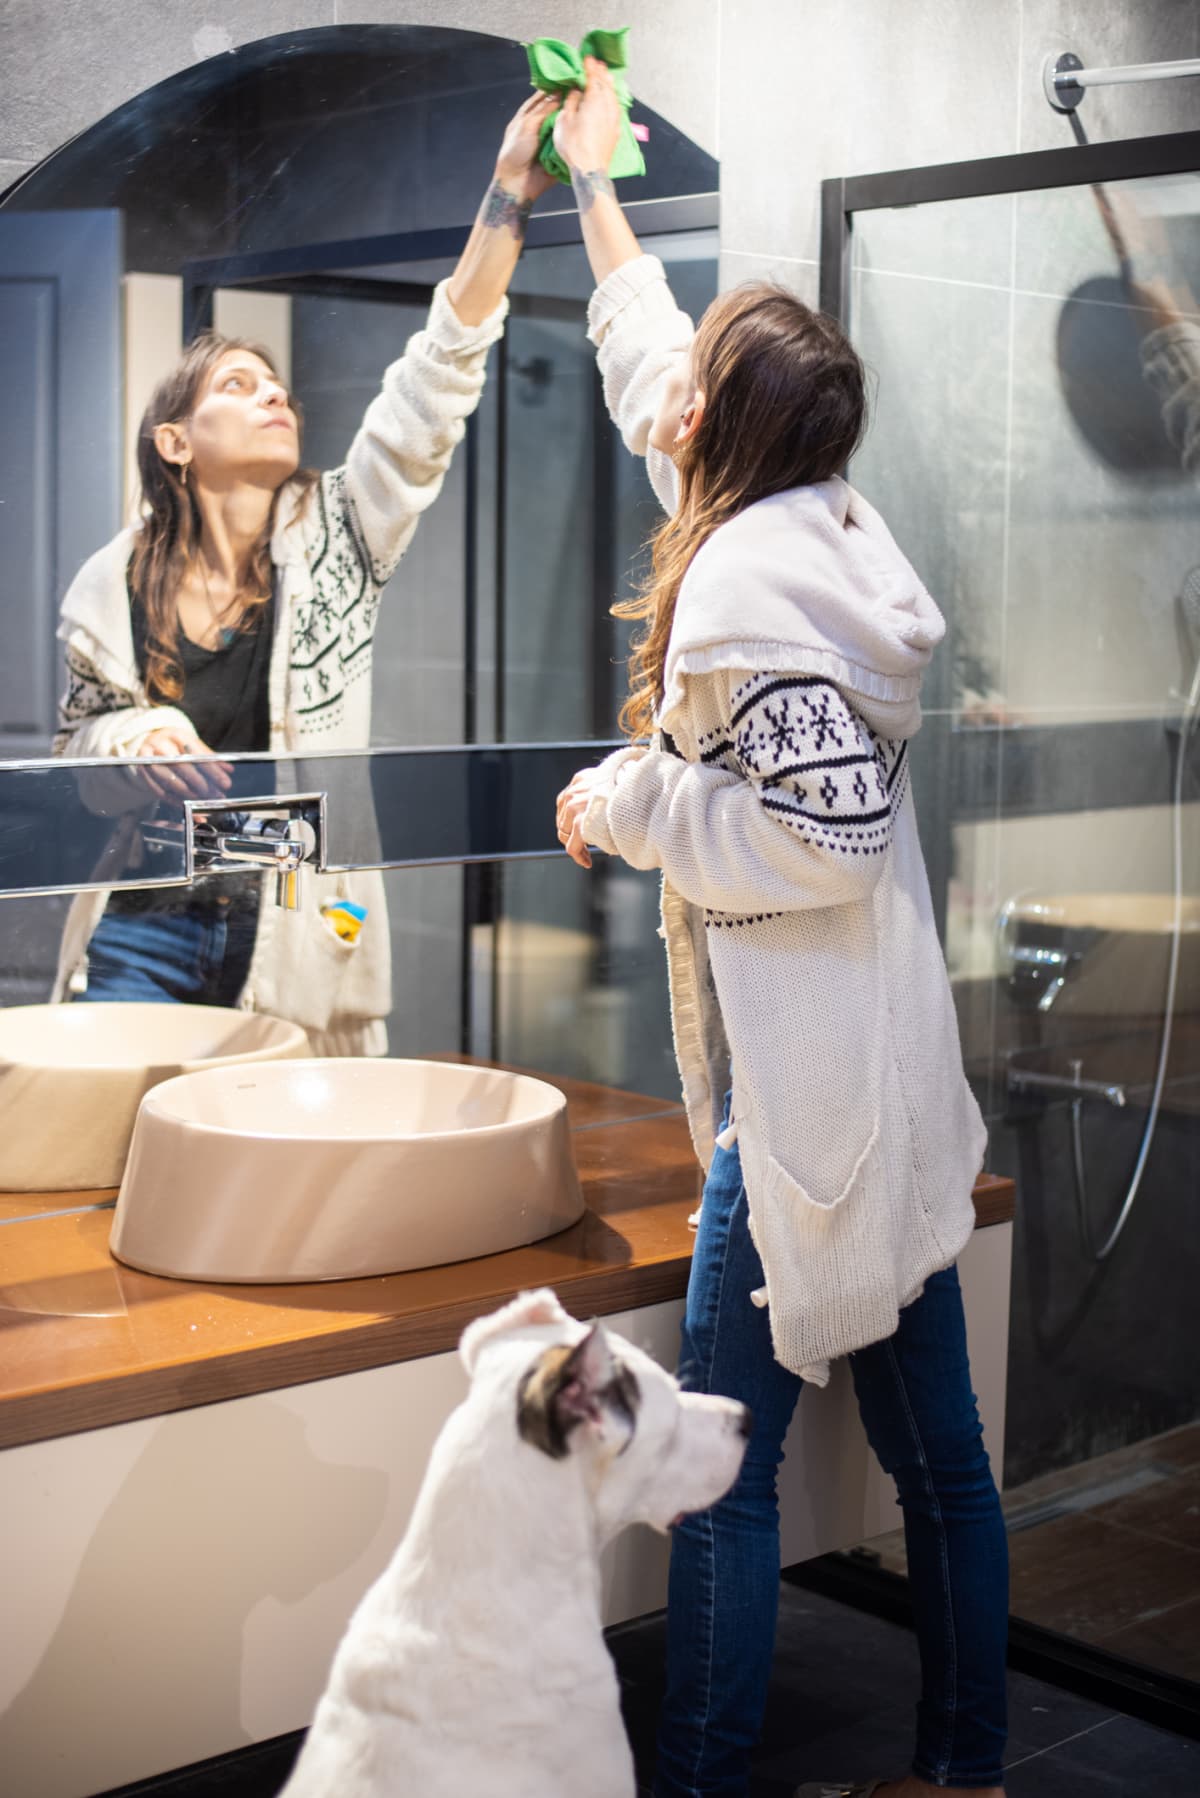 A woman cleaning a bathroom mirror